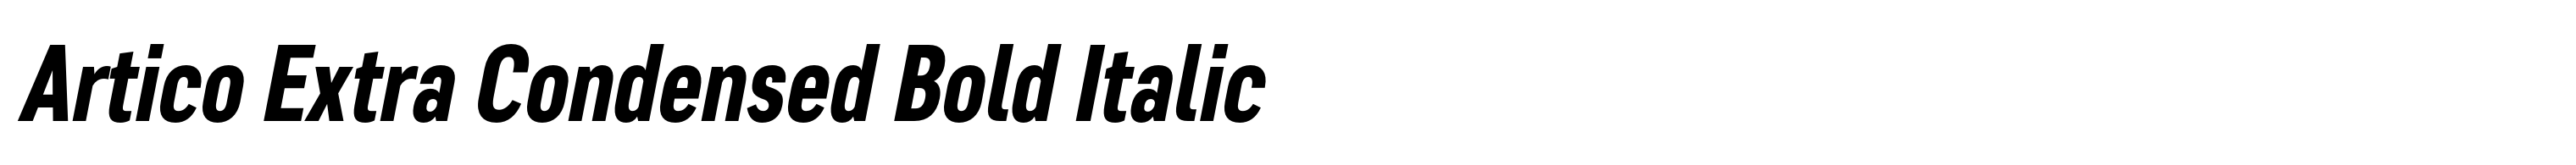 Artico Extra Condensed Bold Italic